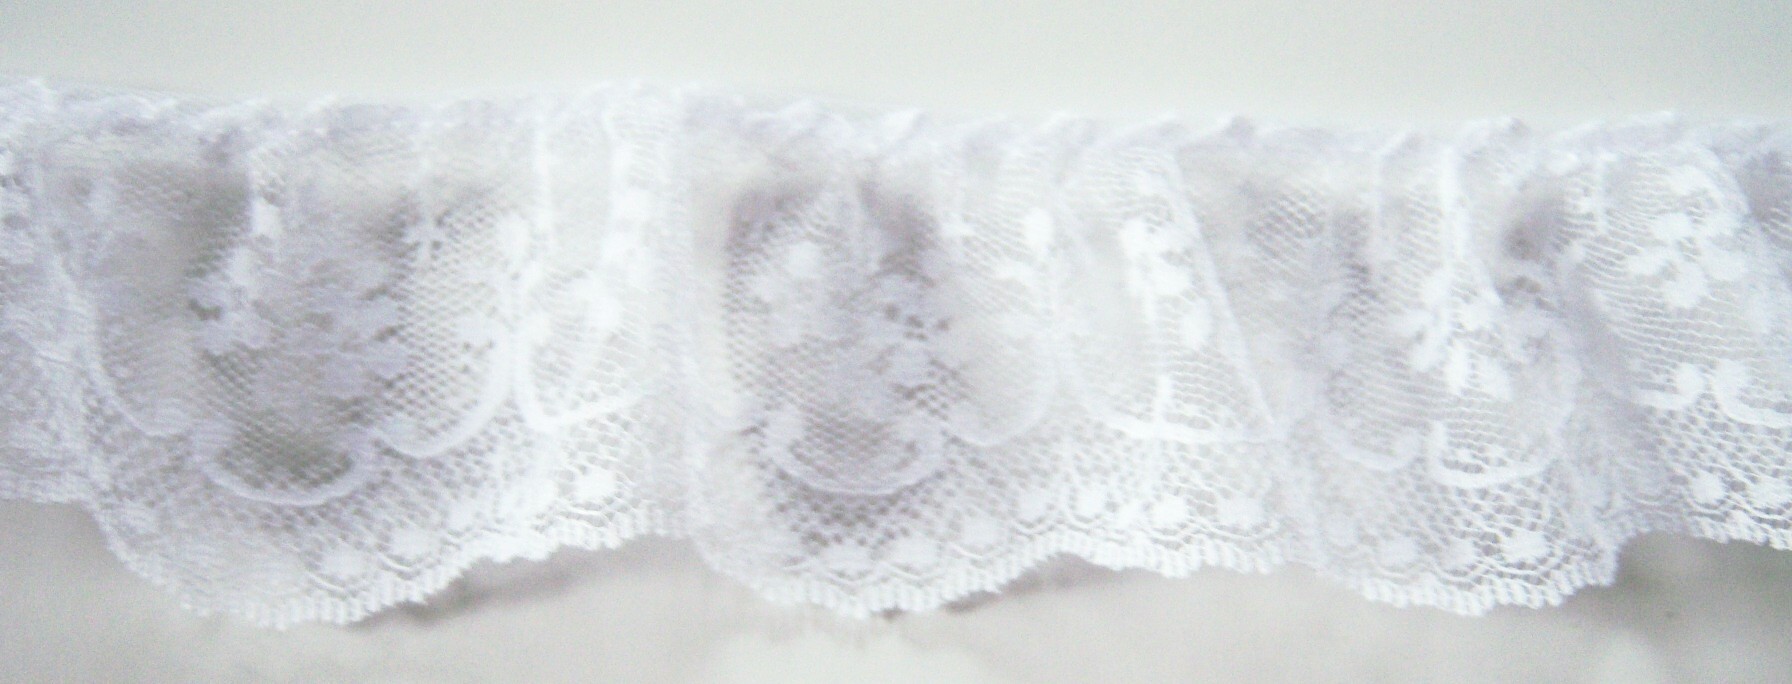 White 2 1/4" Ruffled Lace